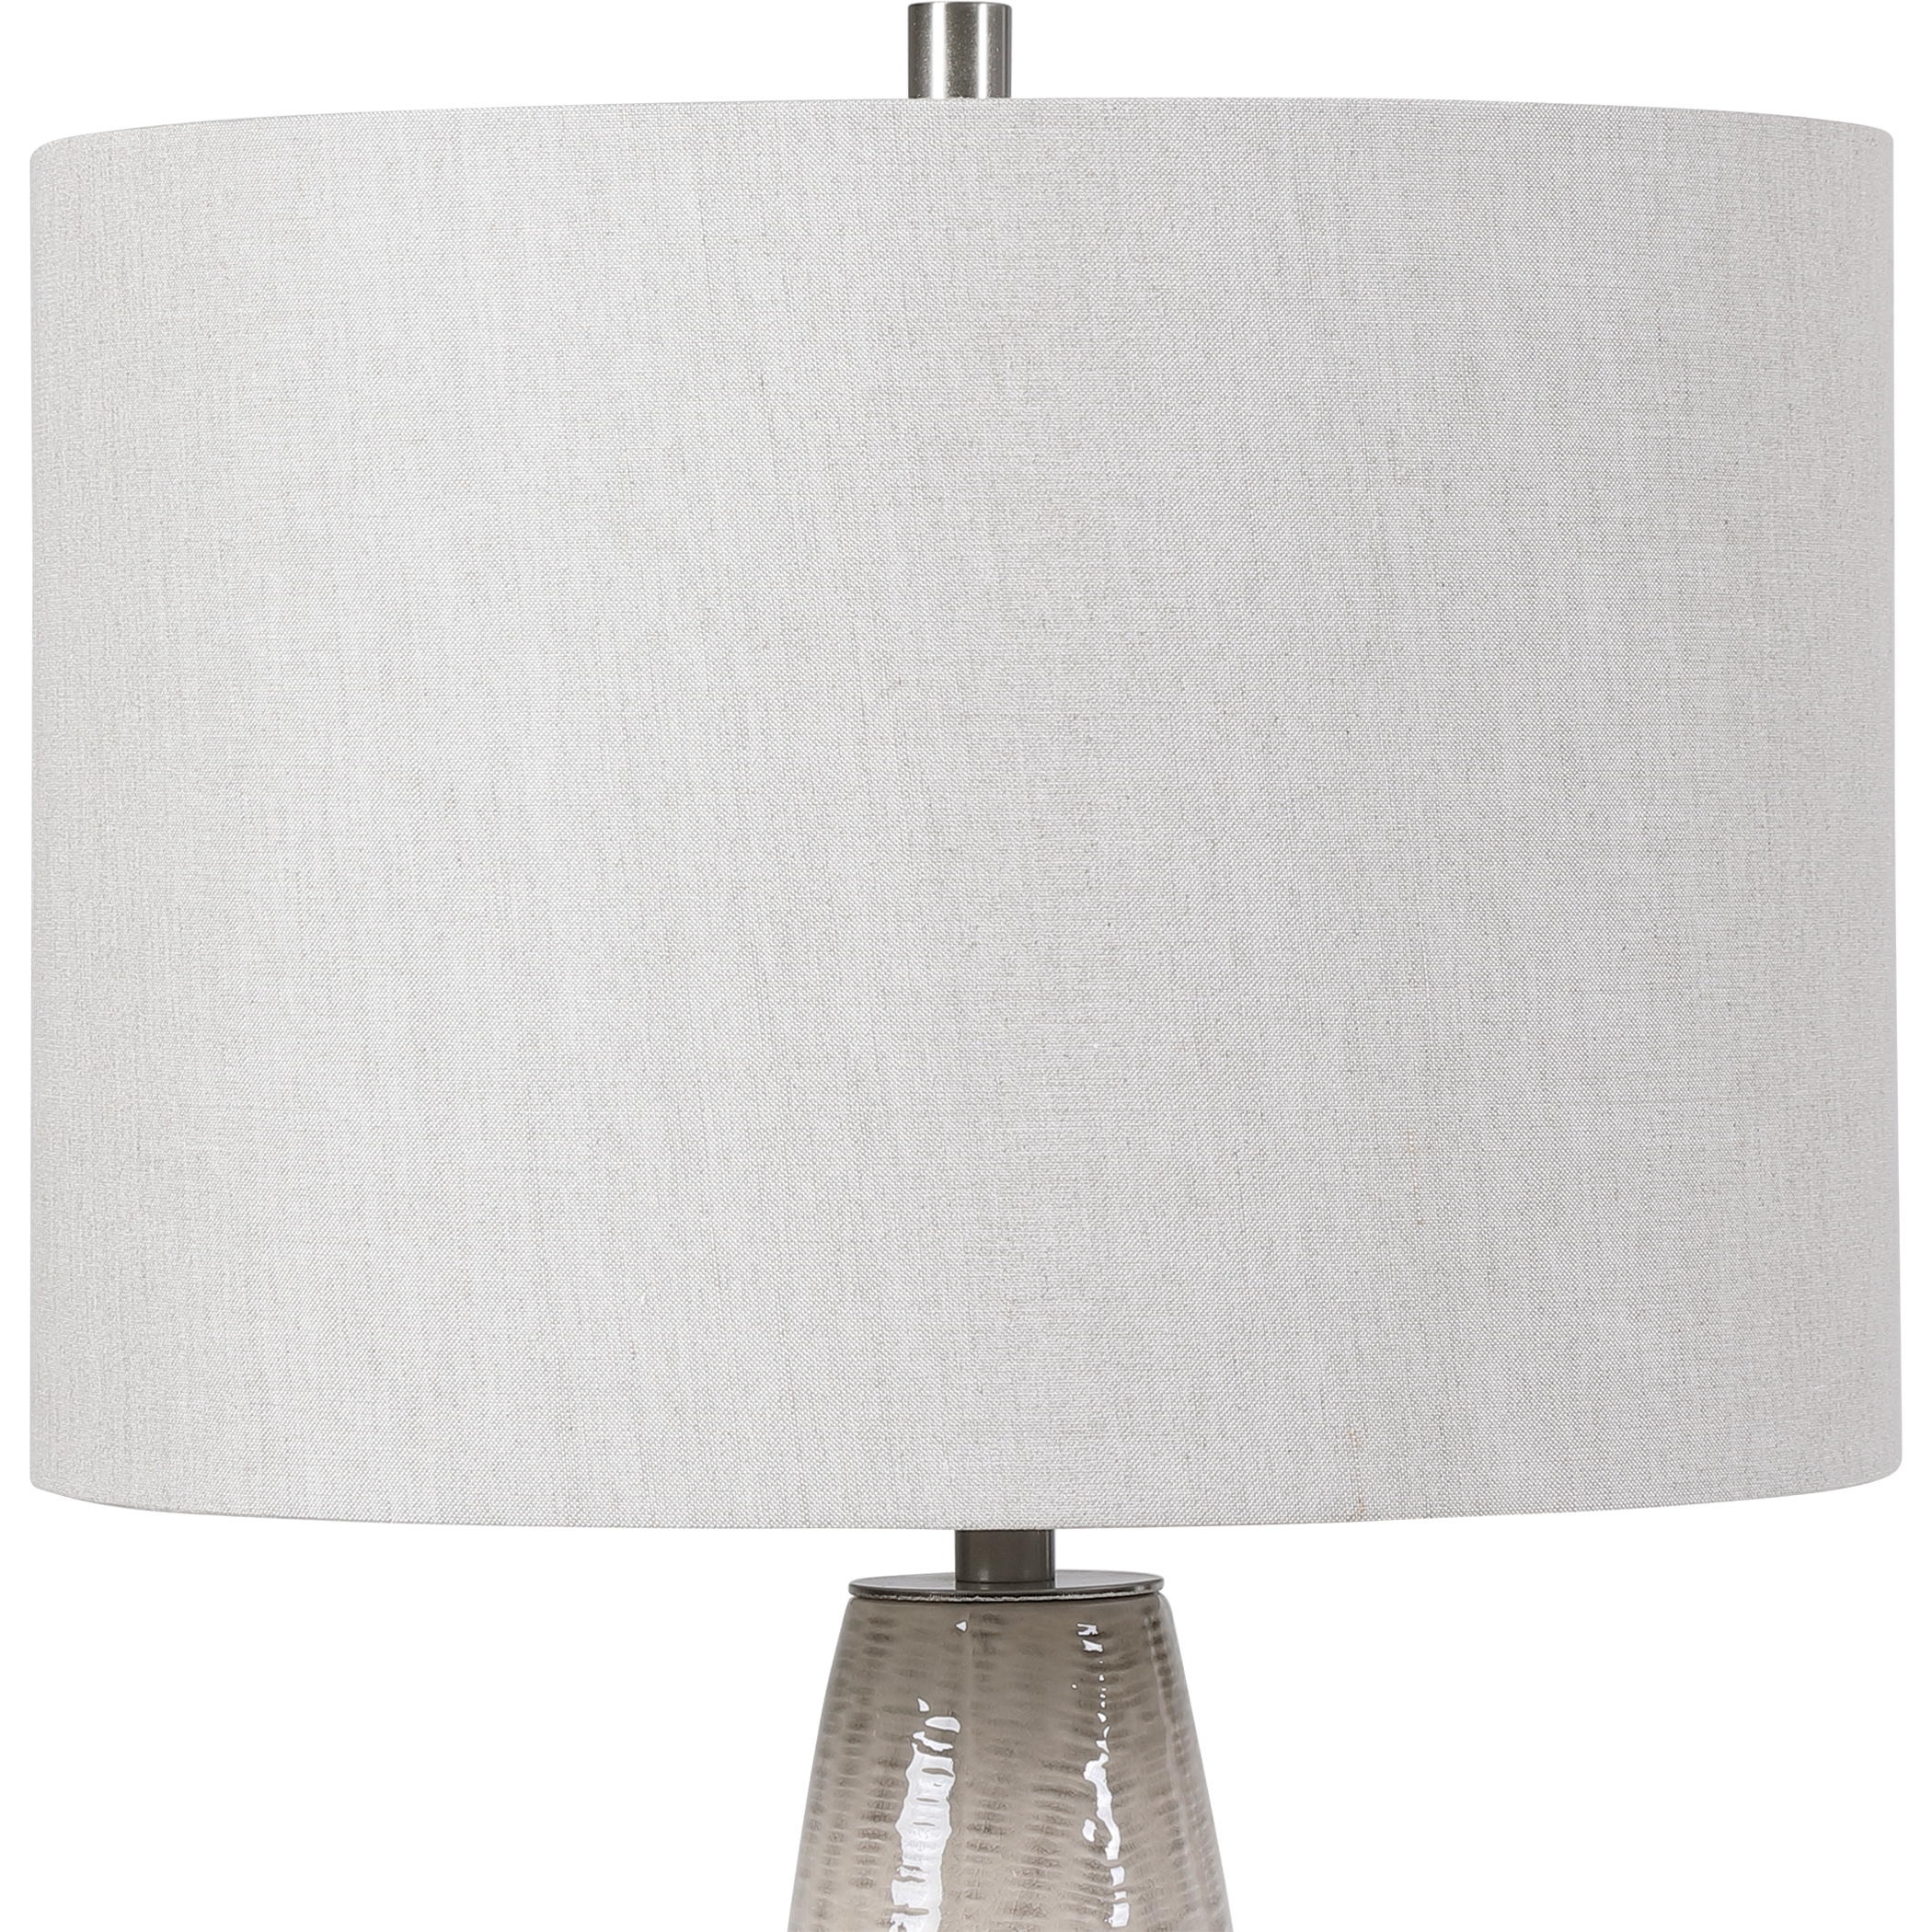 Delgado Light Gray Table Lamp - Image 4